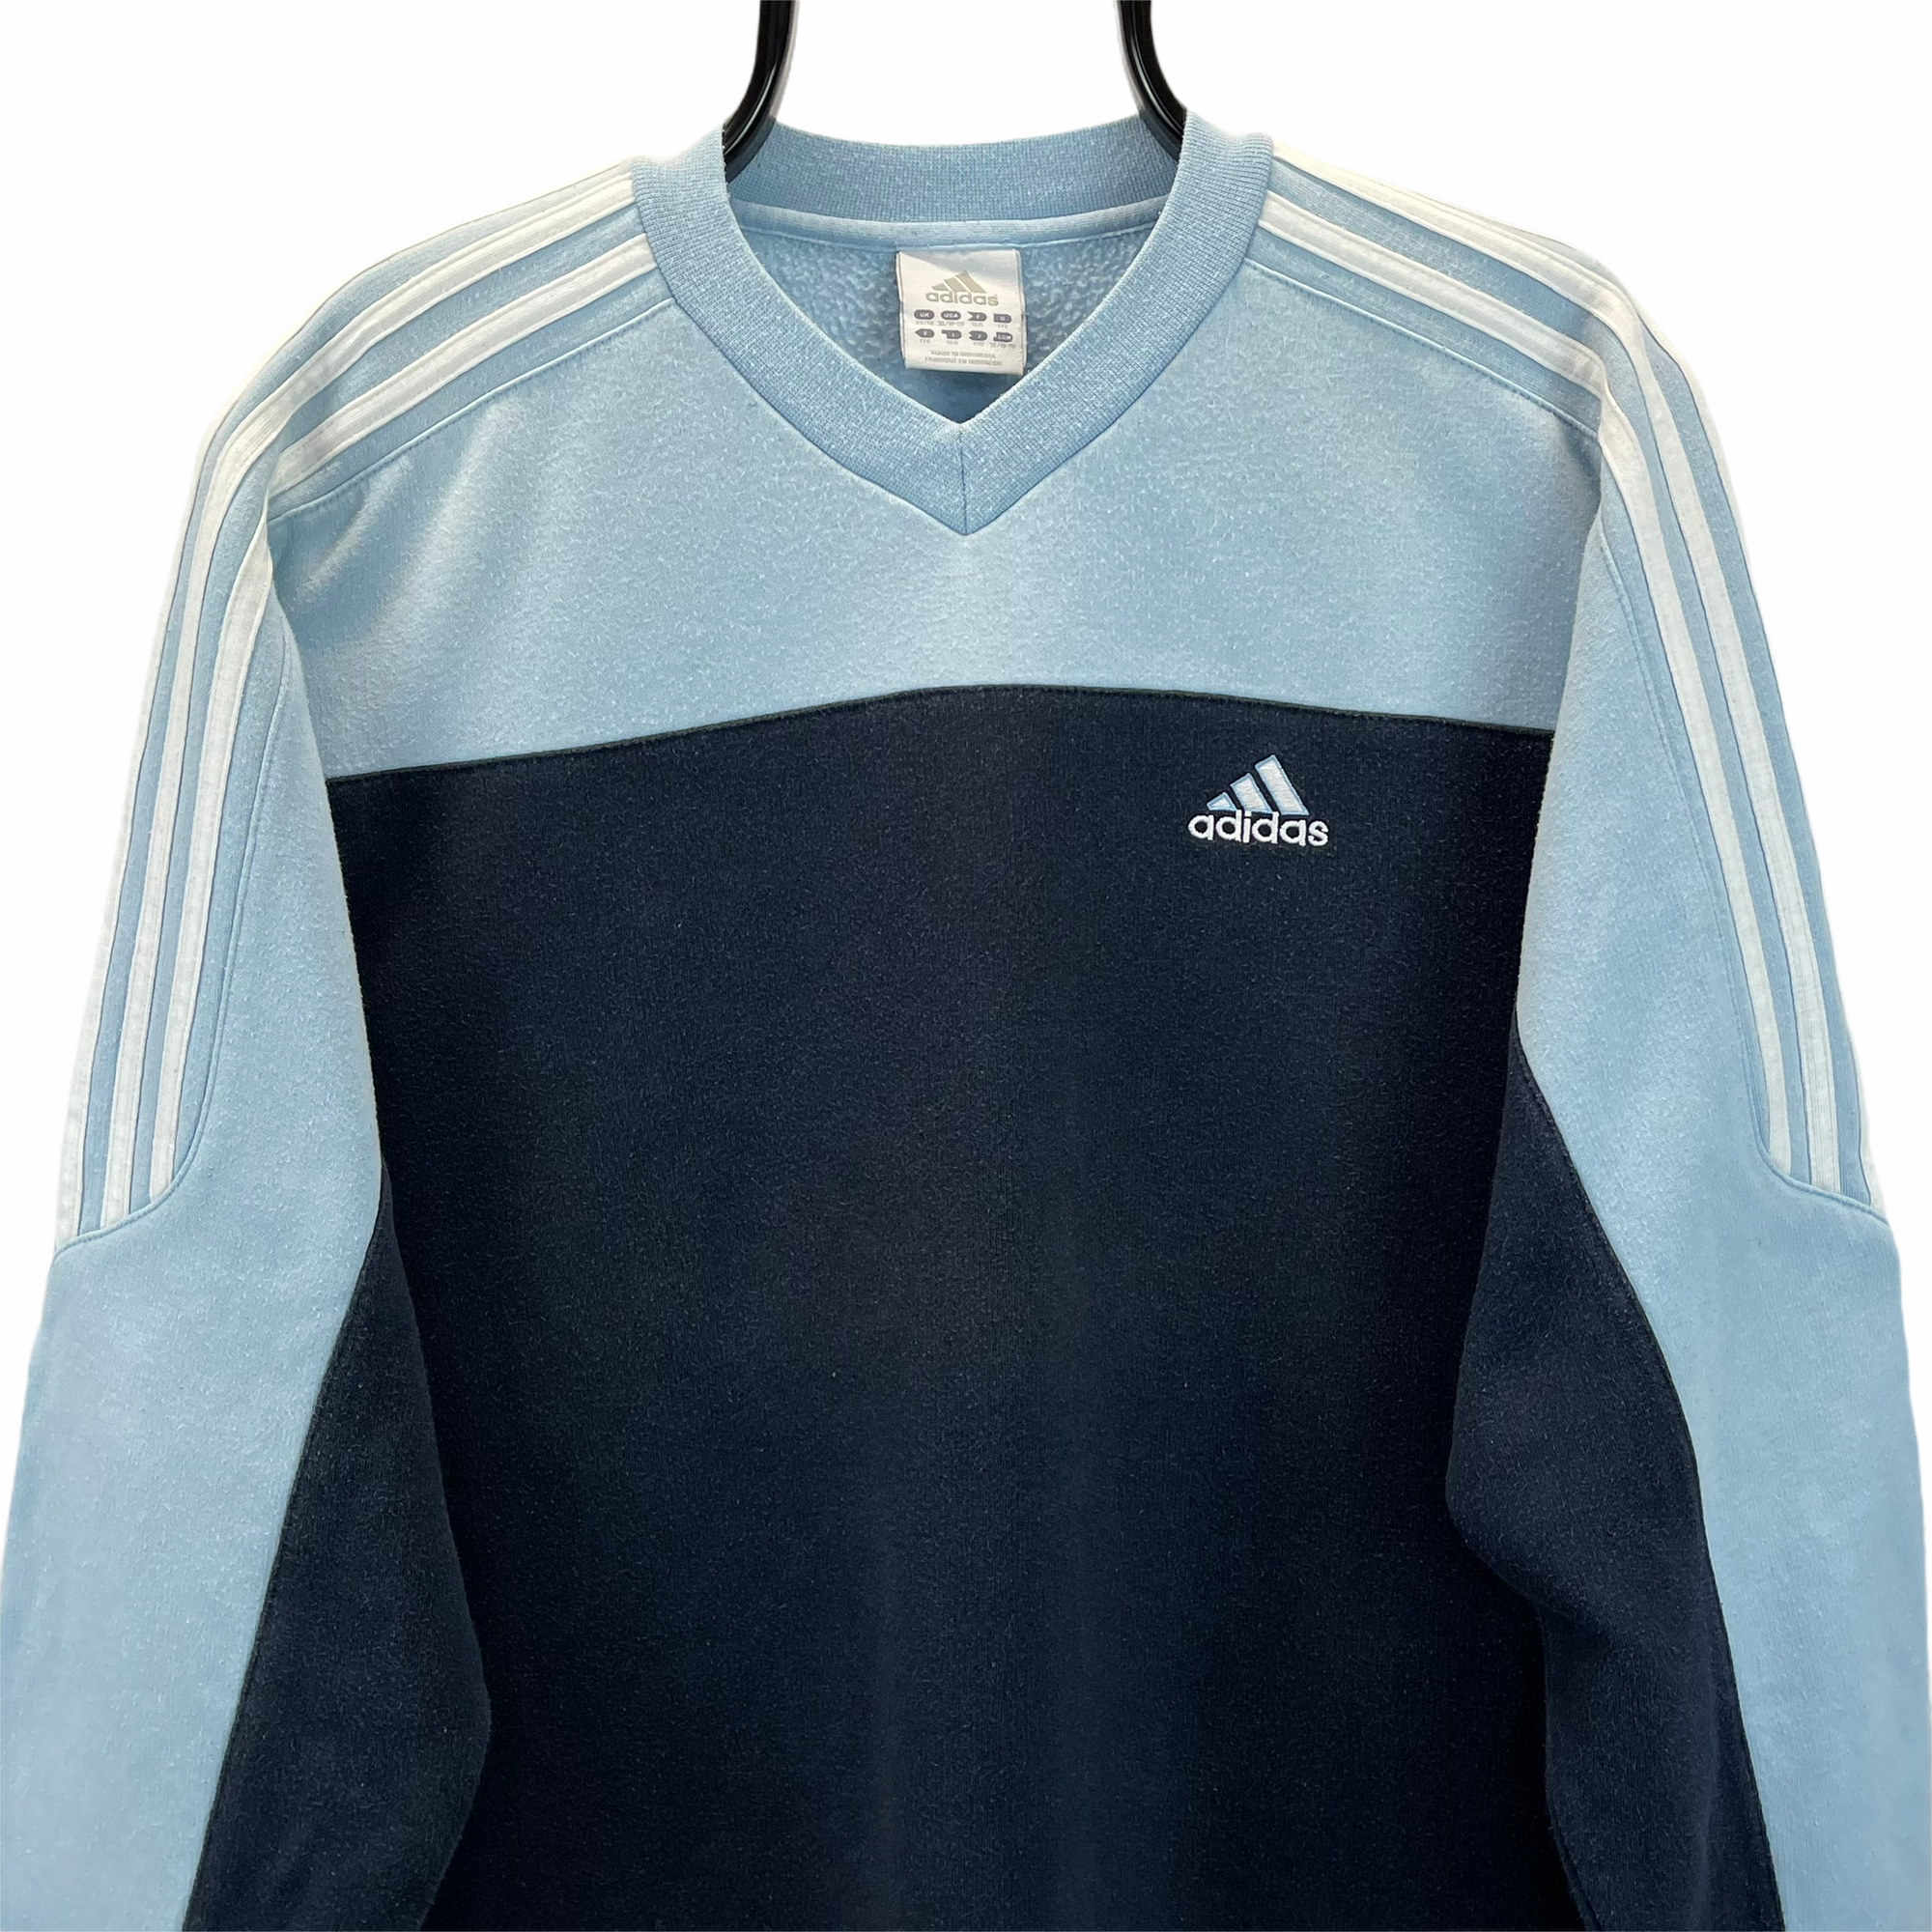 Vintage Adidas Embroidered Small Logo Sweatshirt in Baby Blue & Navy - Men's Medium/Women's Large